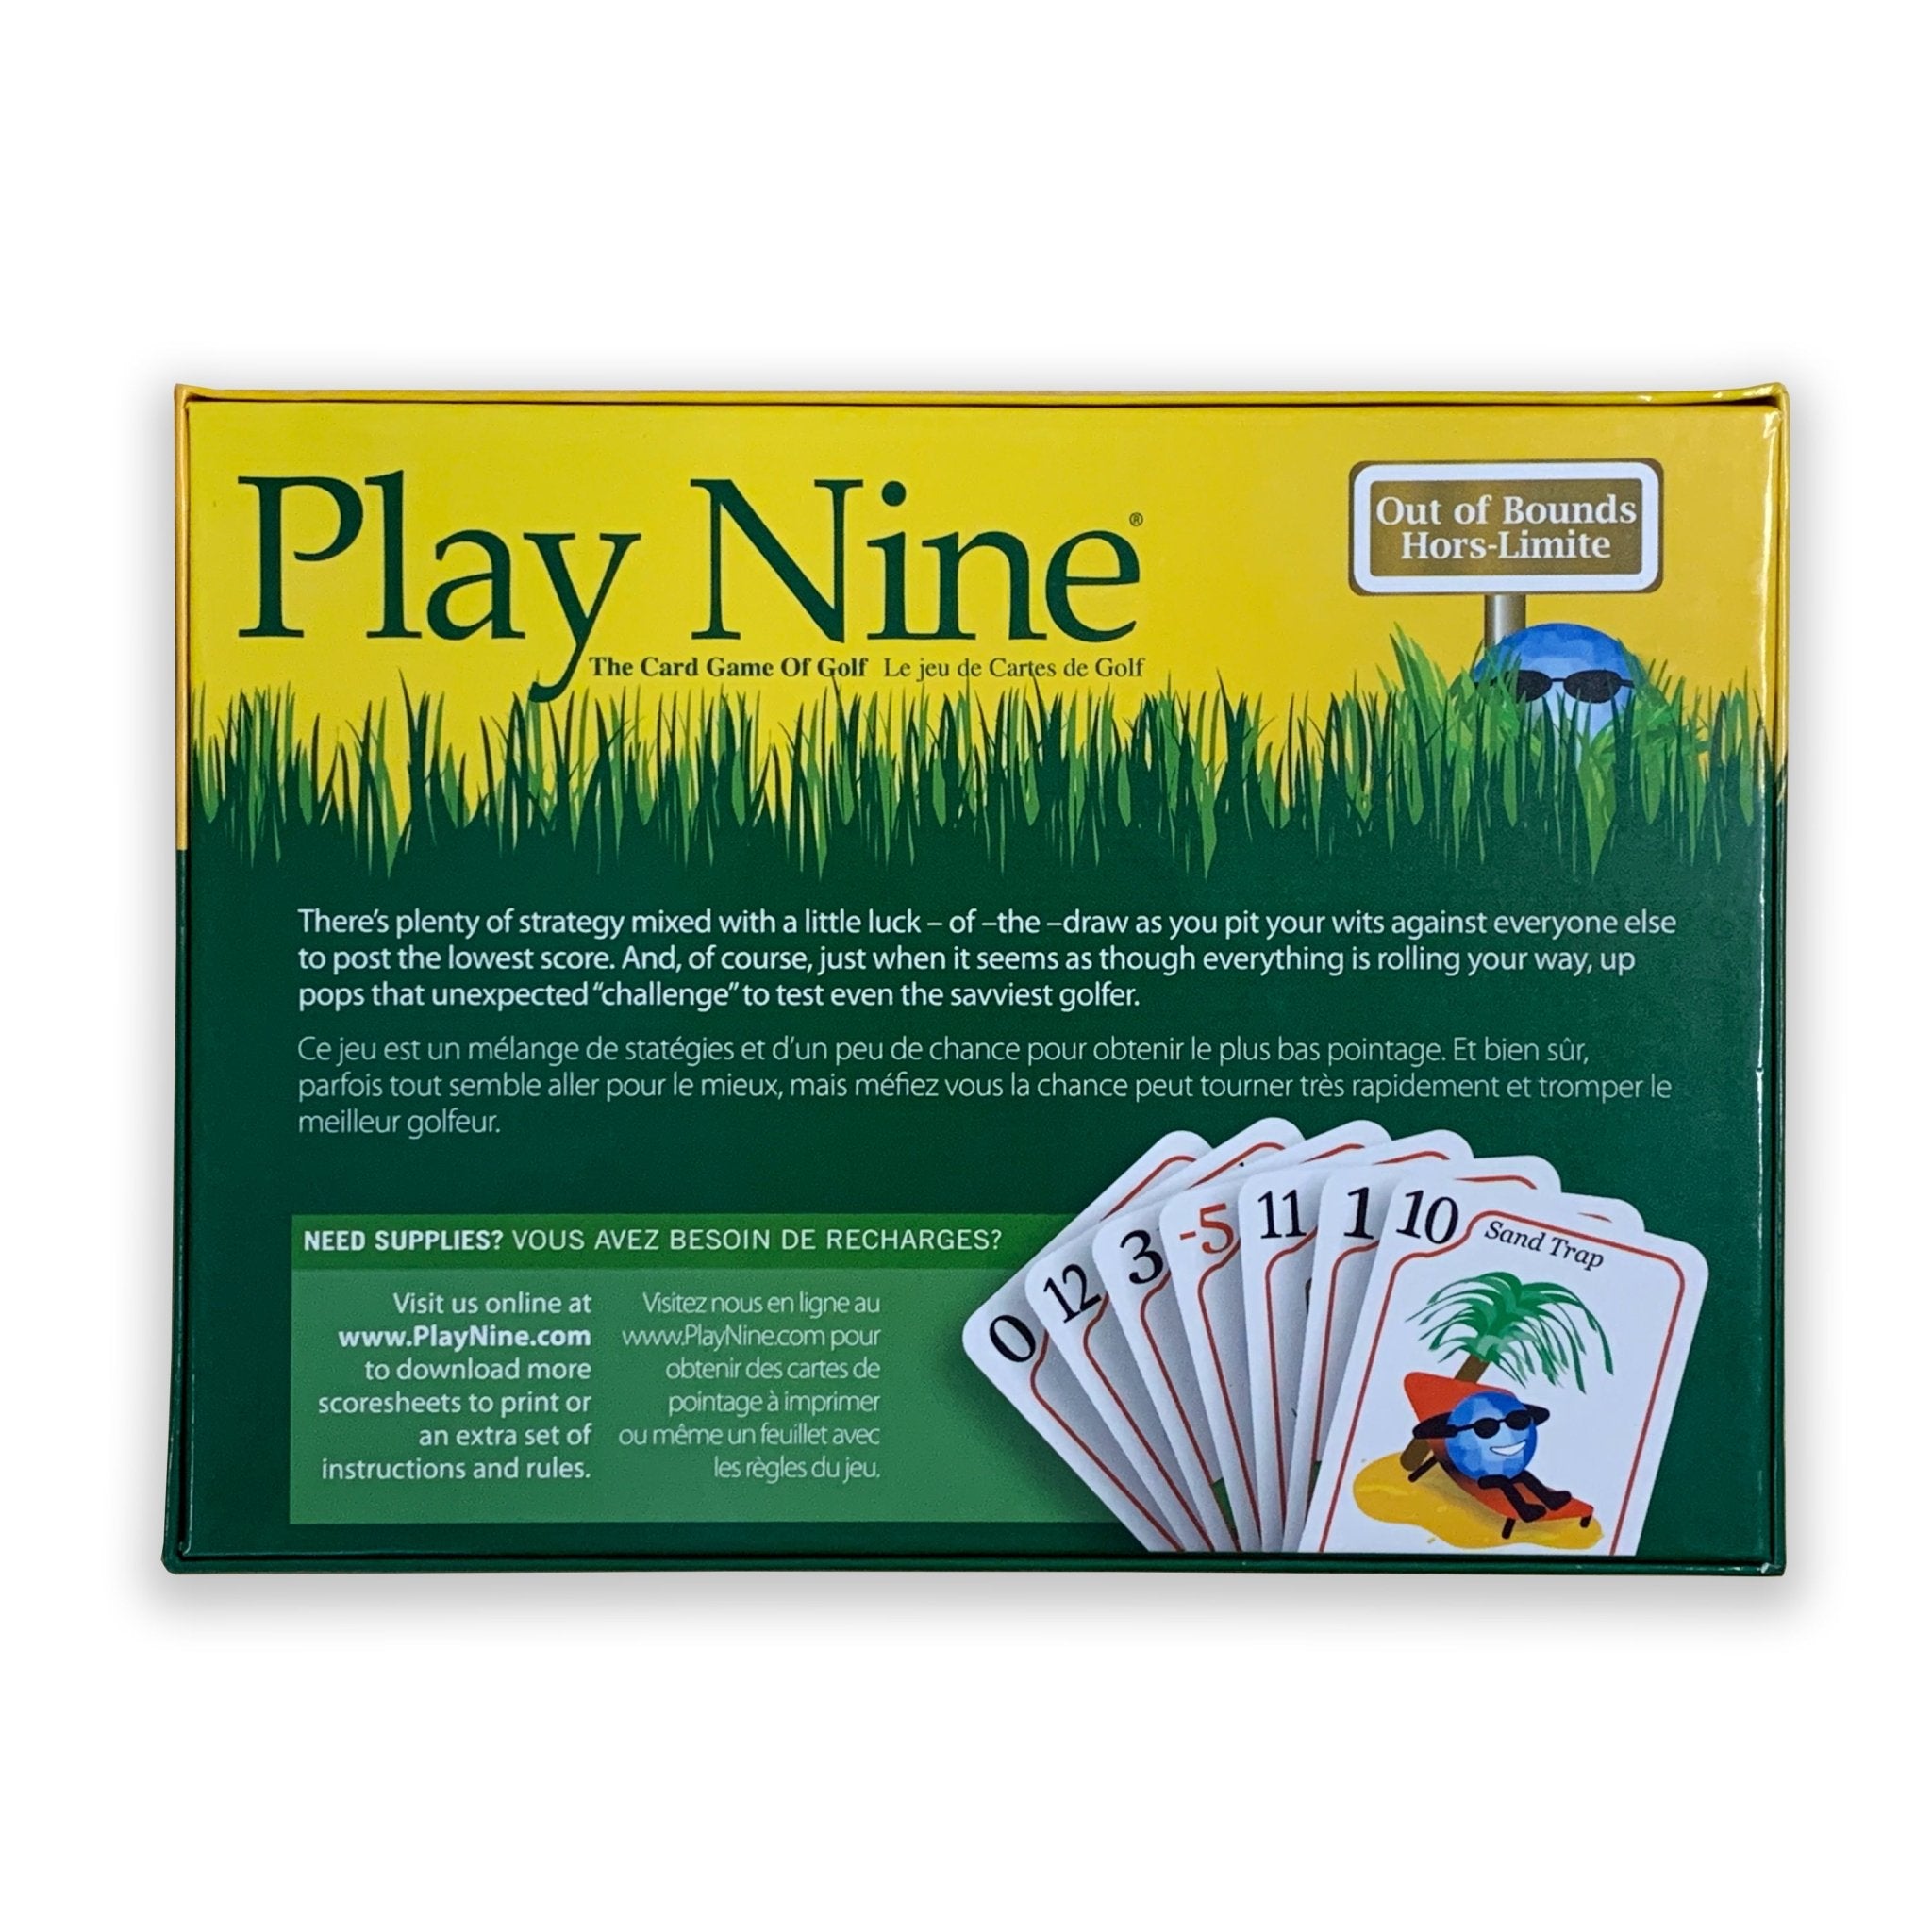 Play Nine –